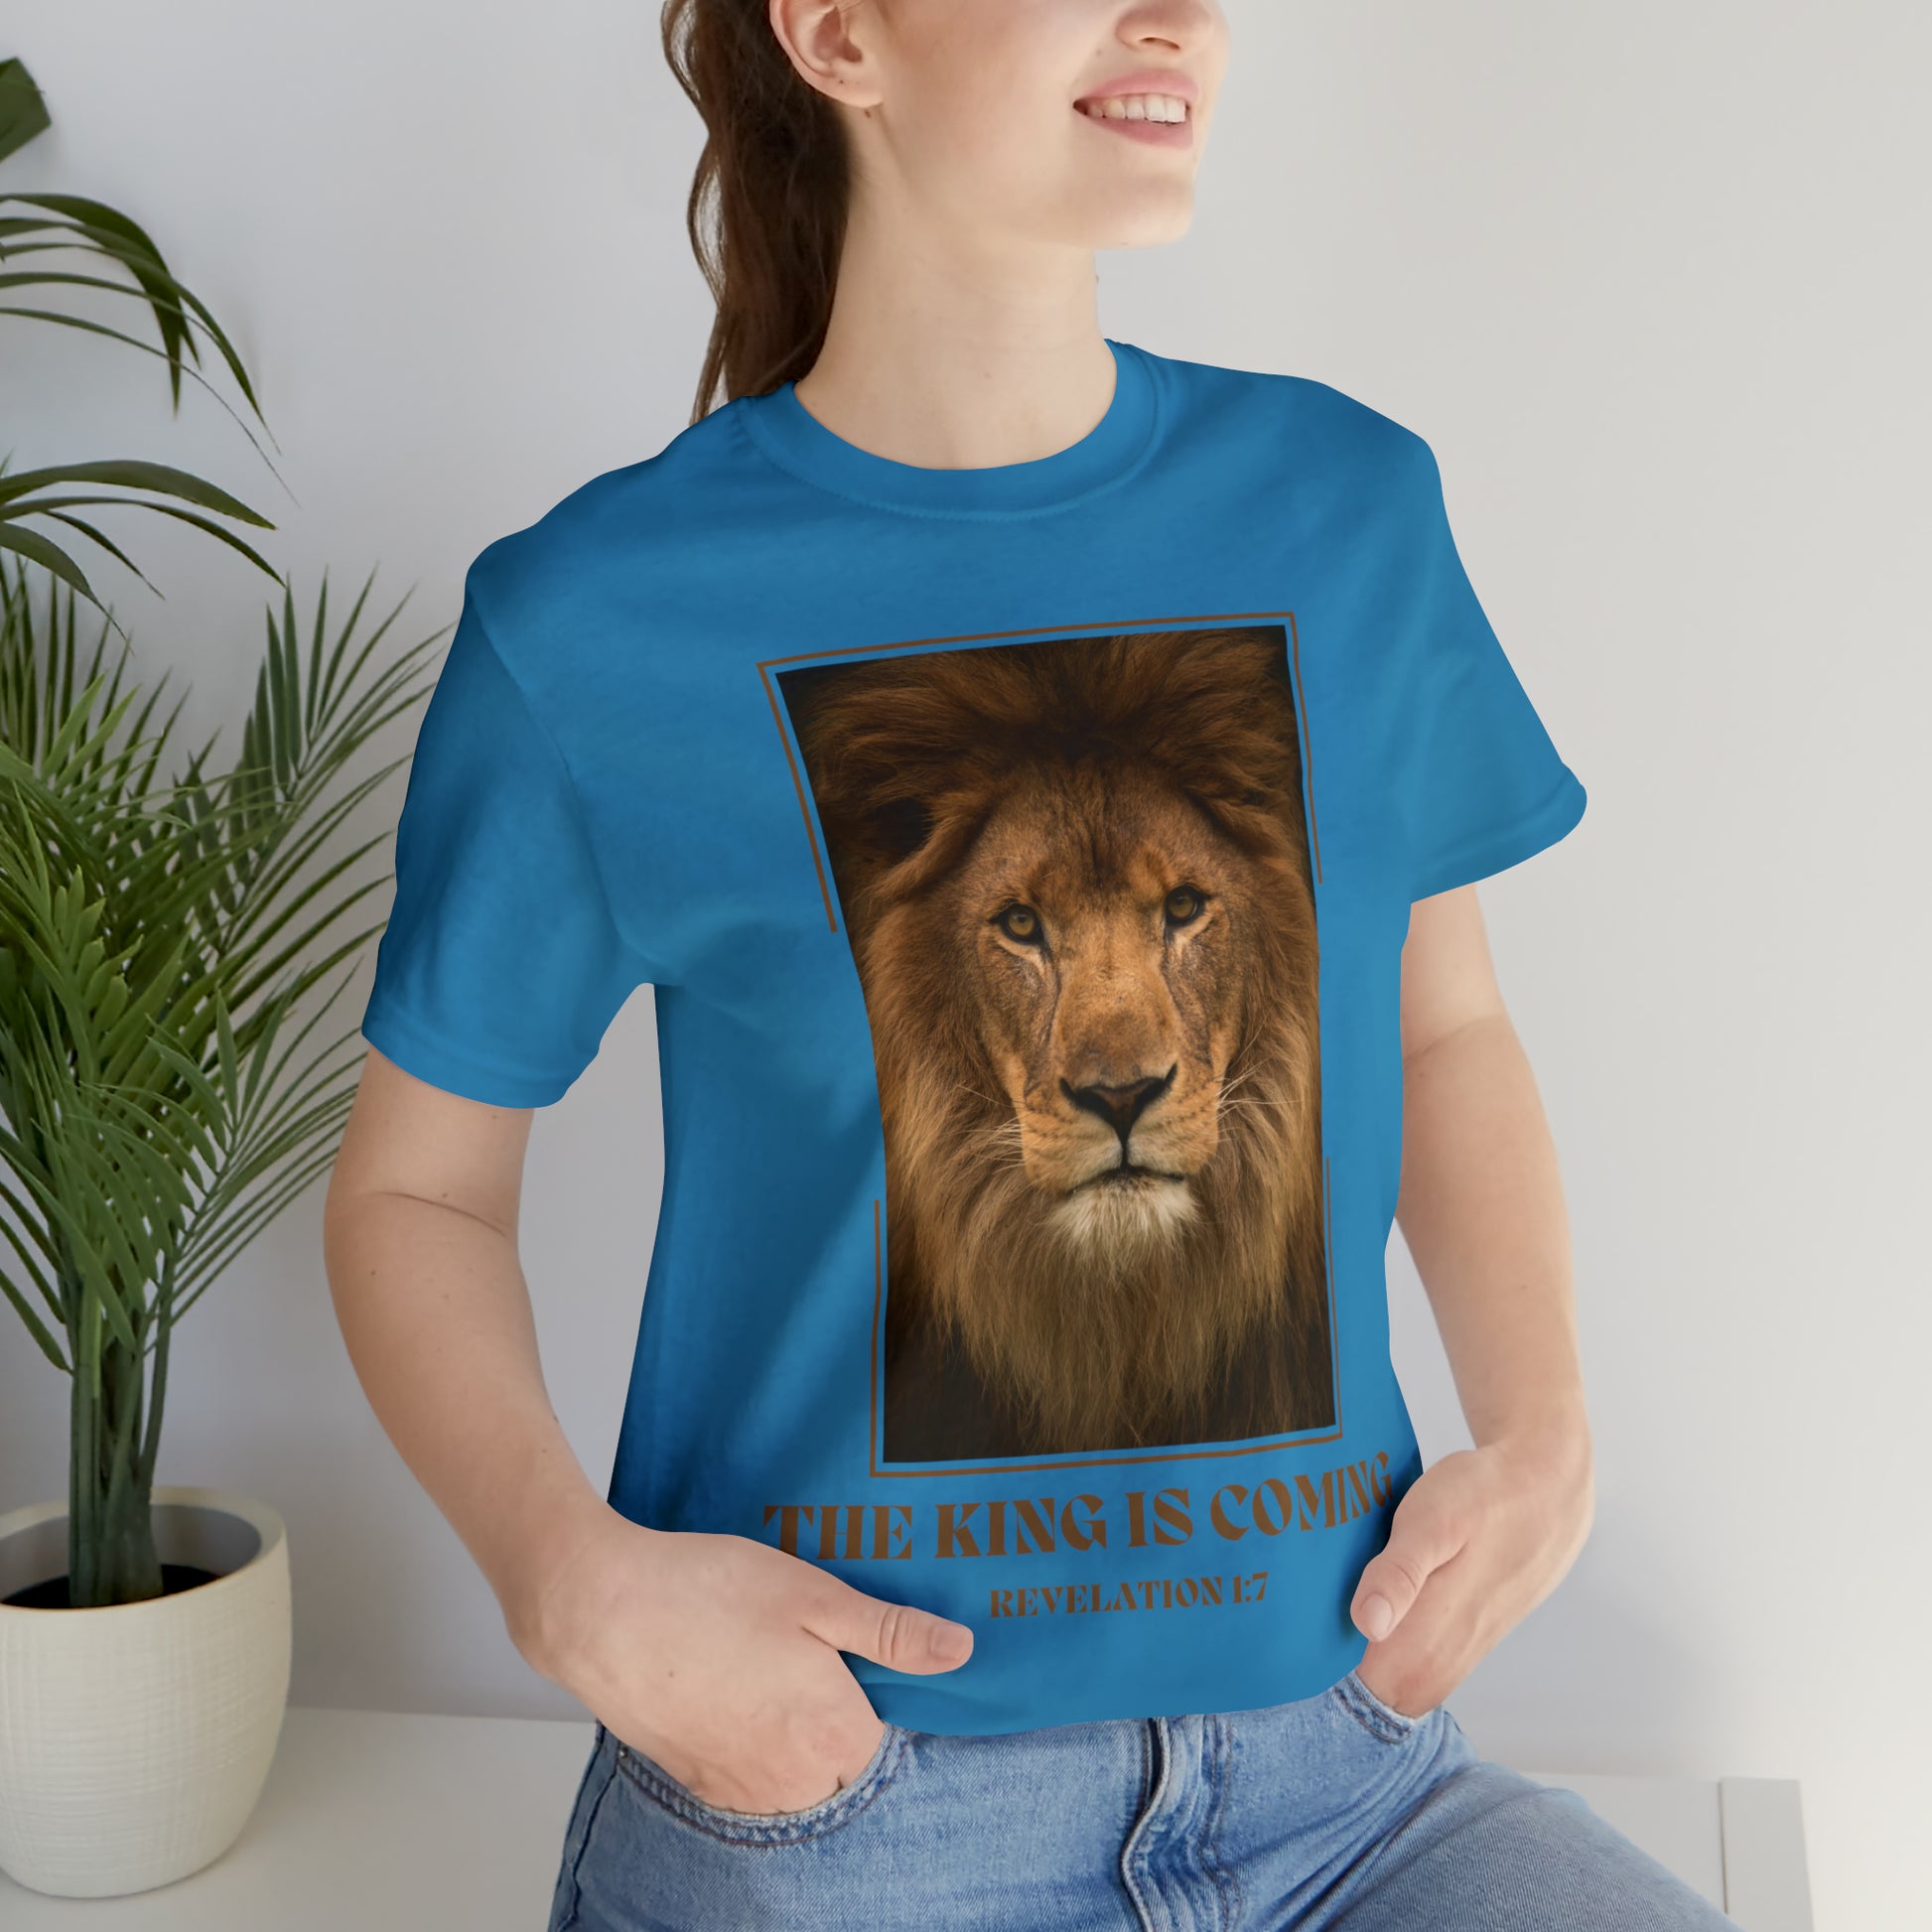 christian shirt with lion